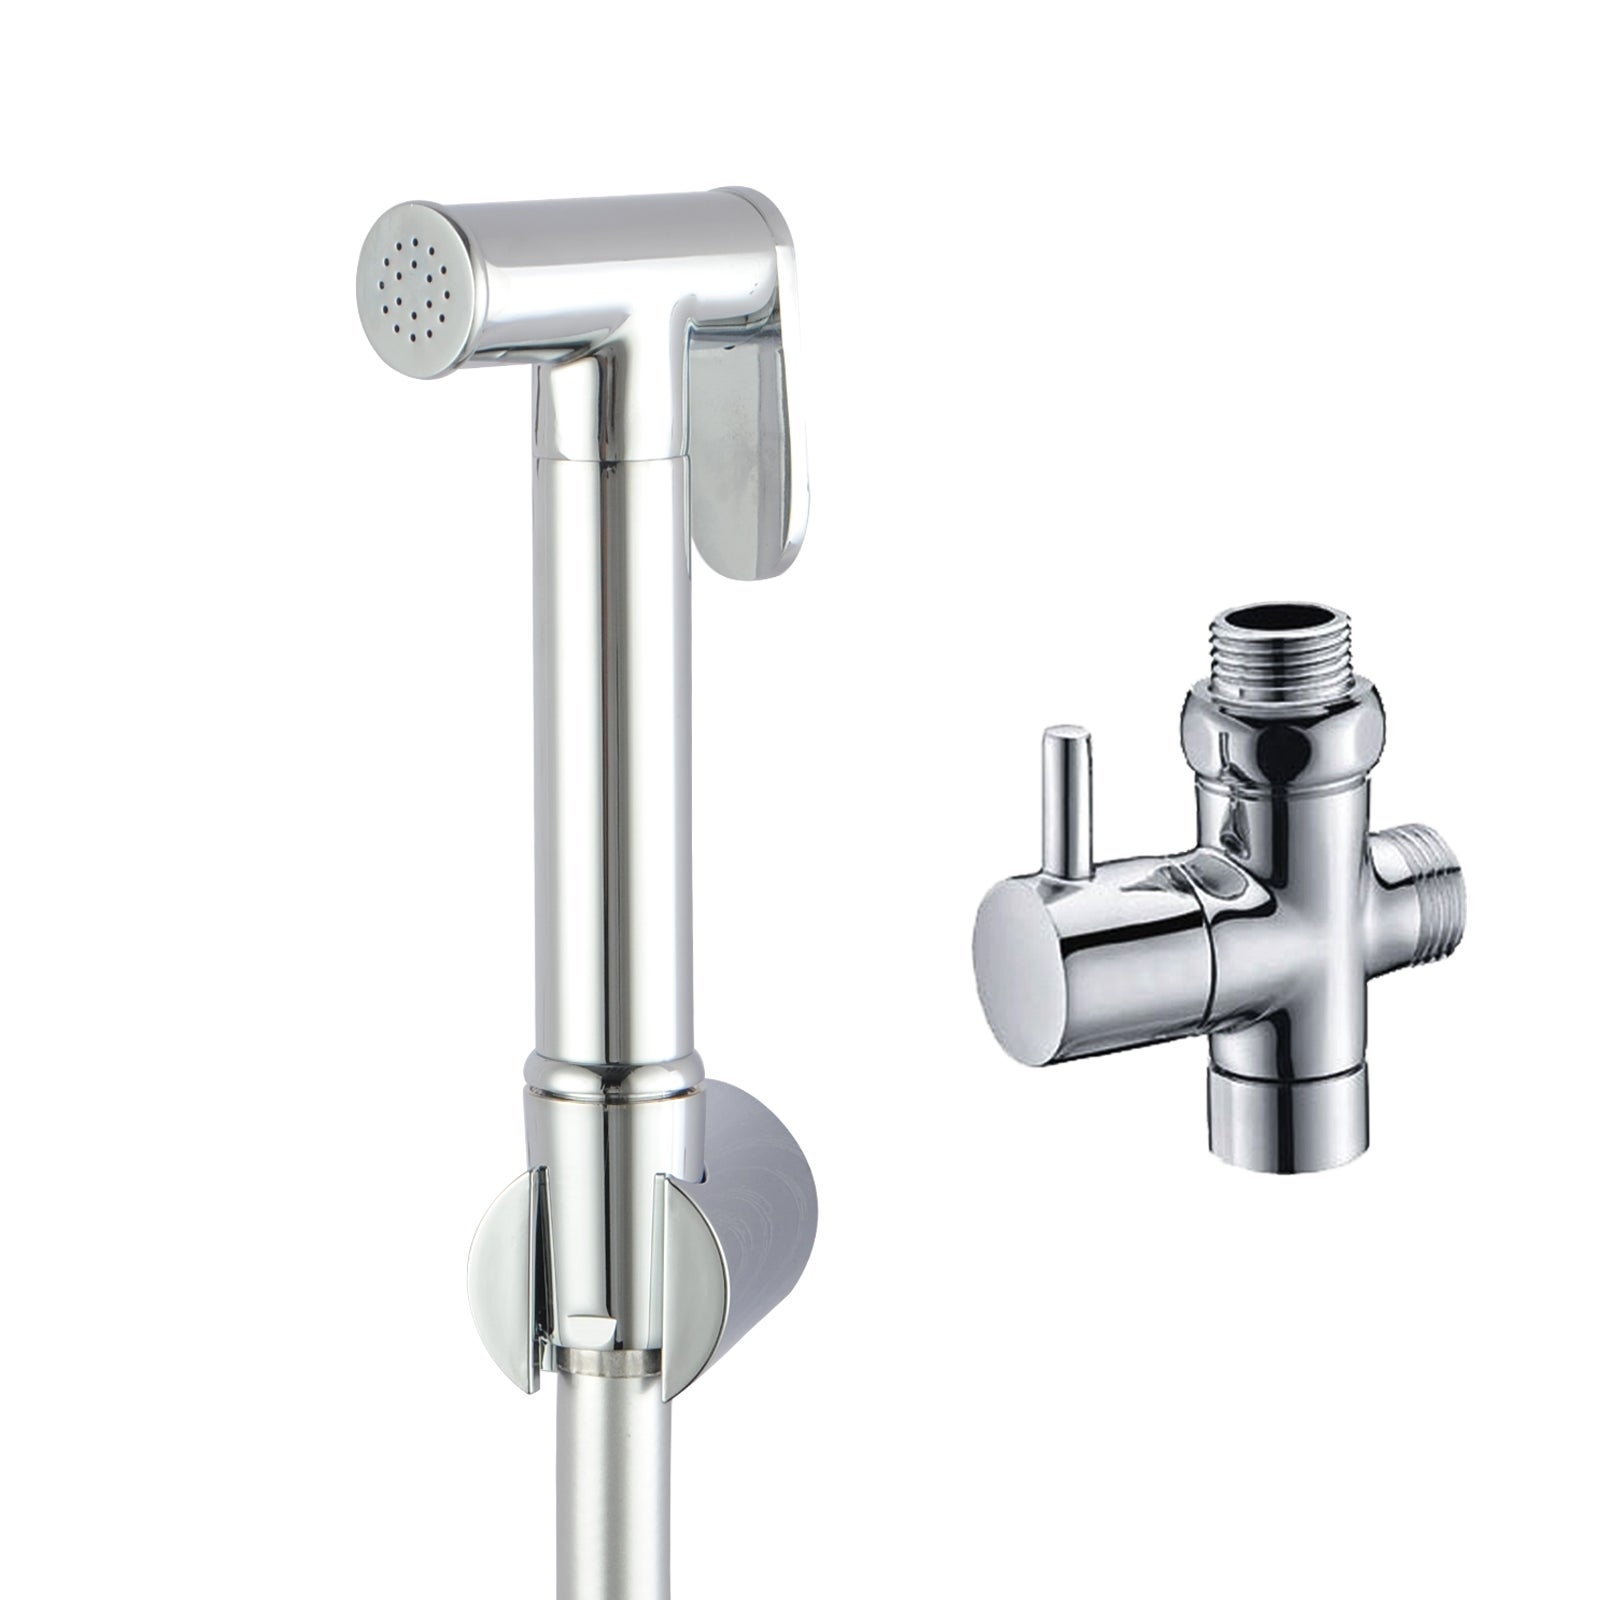 ACA Round Chrome Toilet Bidet Spray Wash Kit with Diverter Tap Set 1.2m PVC Water Hose